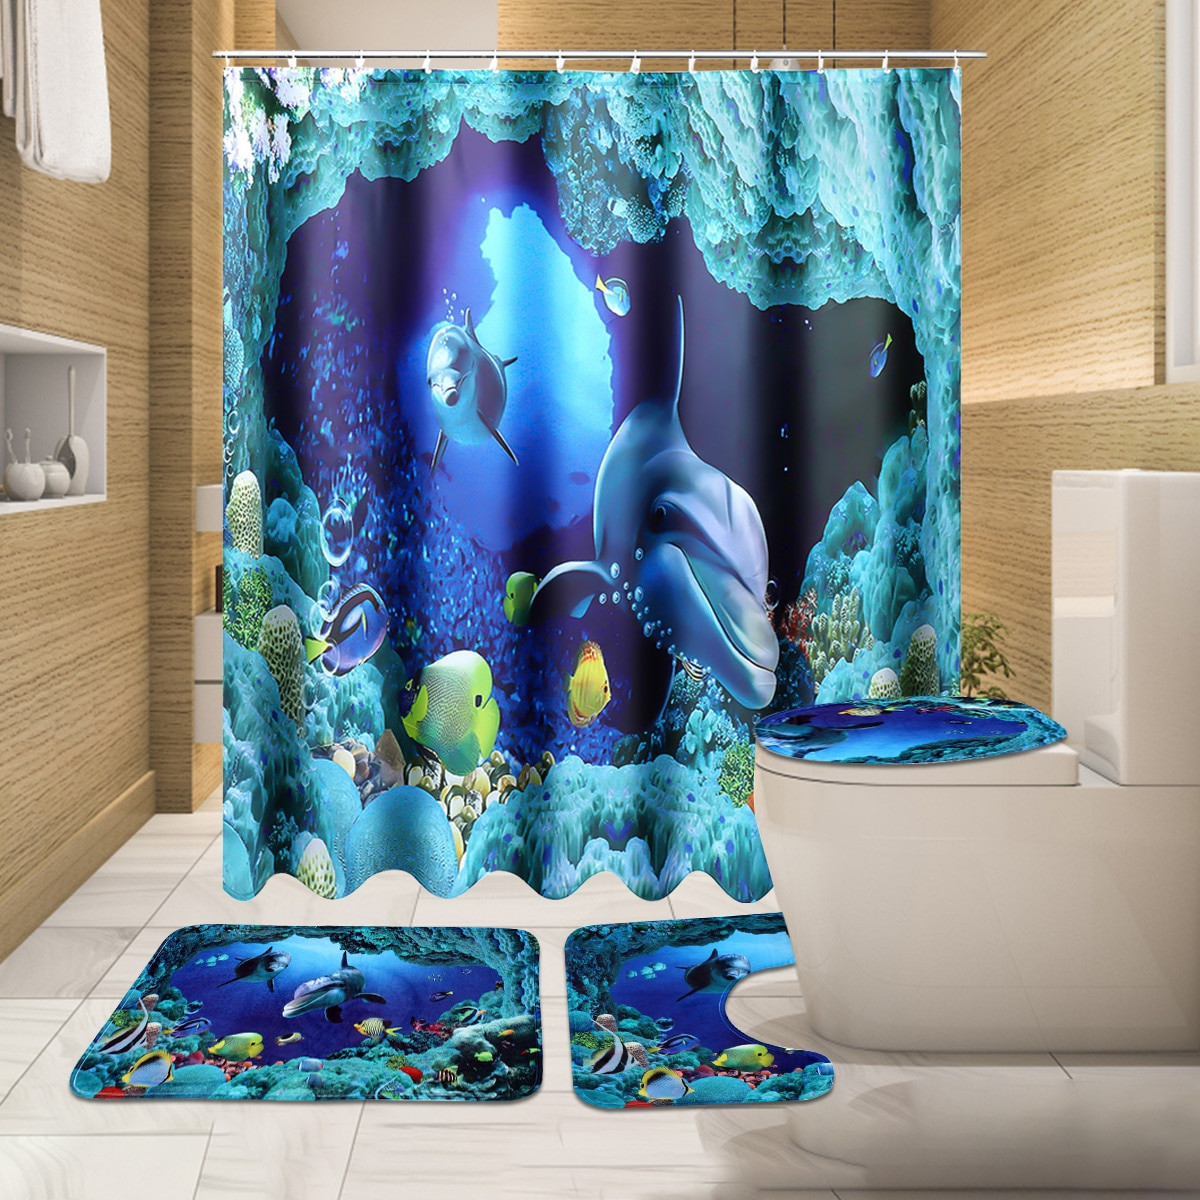 Blue Bathroom Shower Curtains
 Blue Ocean Dolphin Bathroom Shower Curtain Waterproof Bath